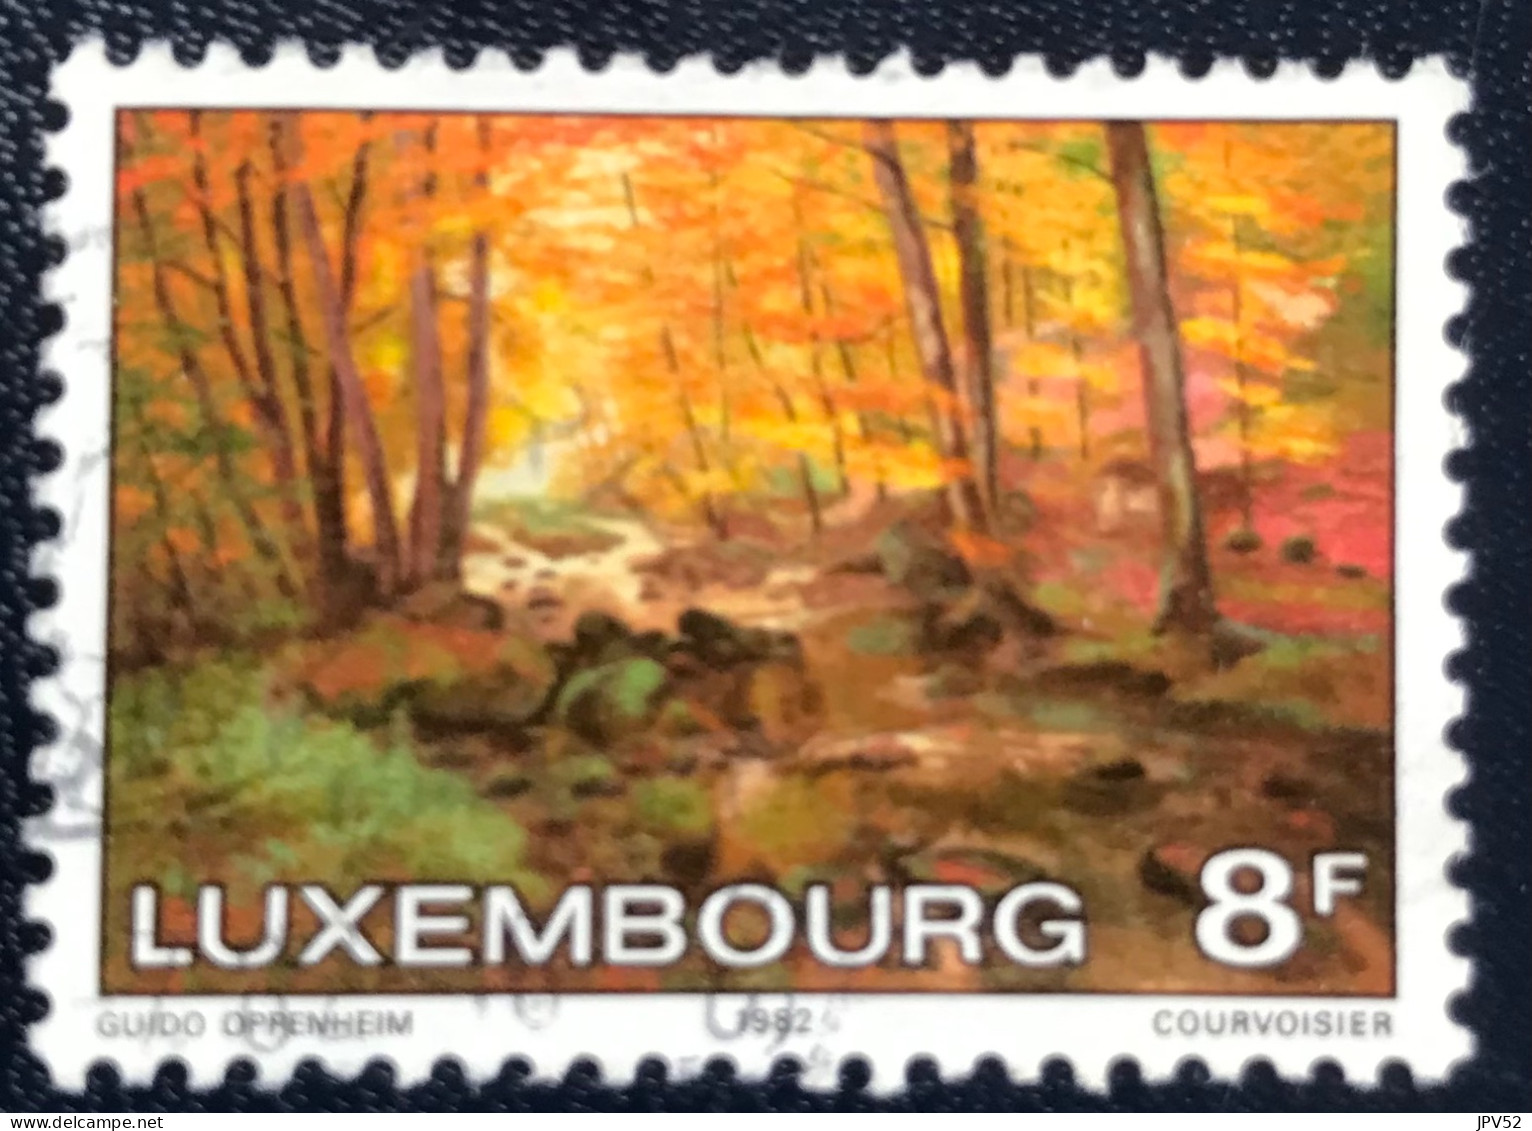 Luxembourg - Luxemburg - C18/31 - 1982 - (°)used - Michel 1048 - Schilderijen - Used Stamps